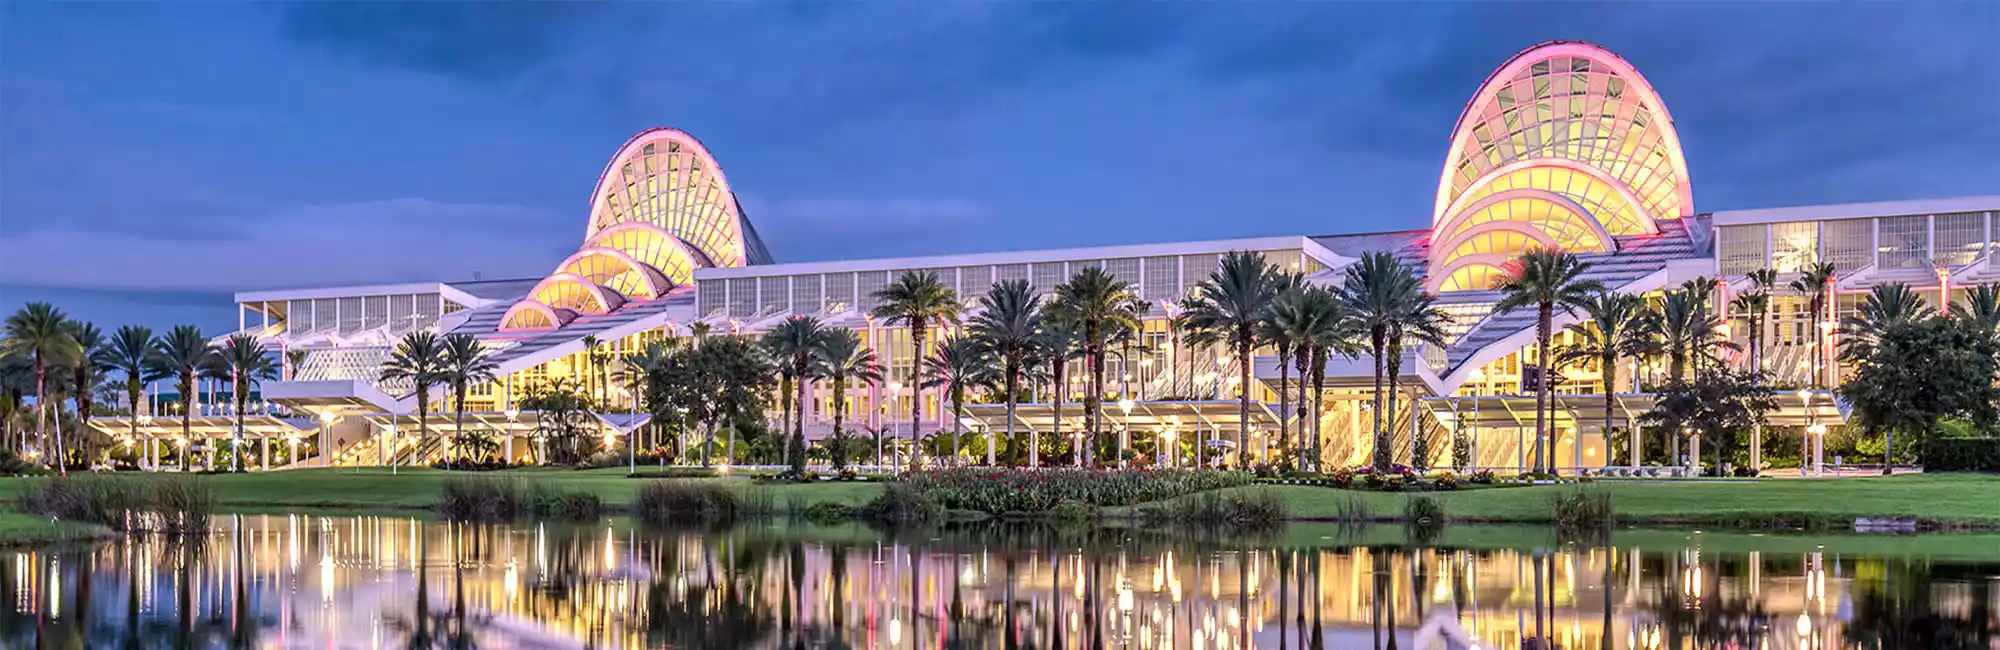 Orange County Convention Center Information - International Drive Resort  Area